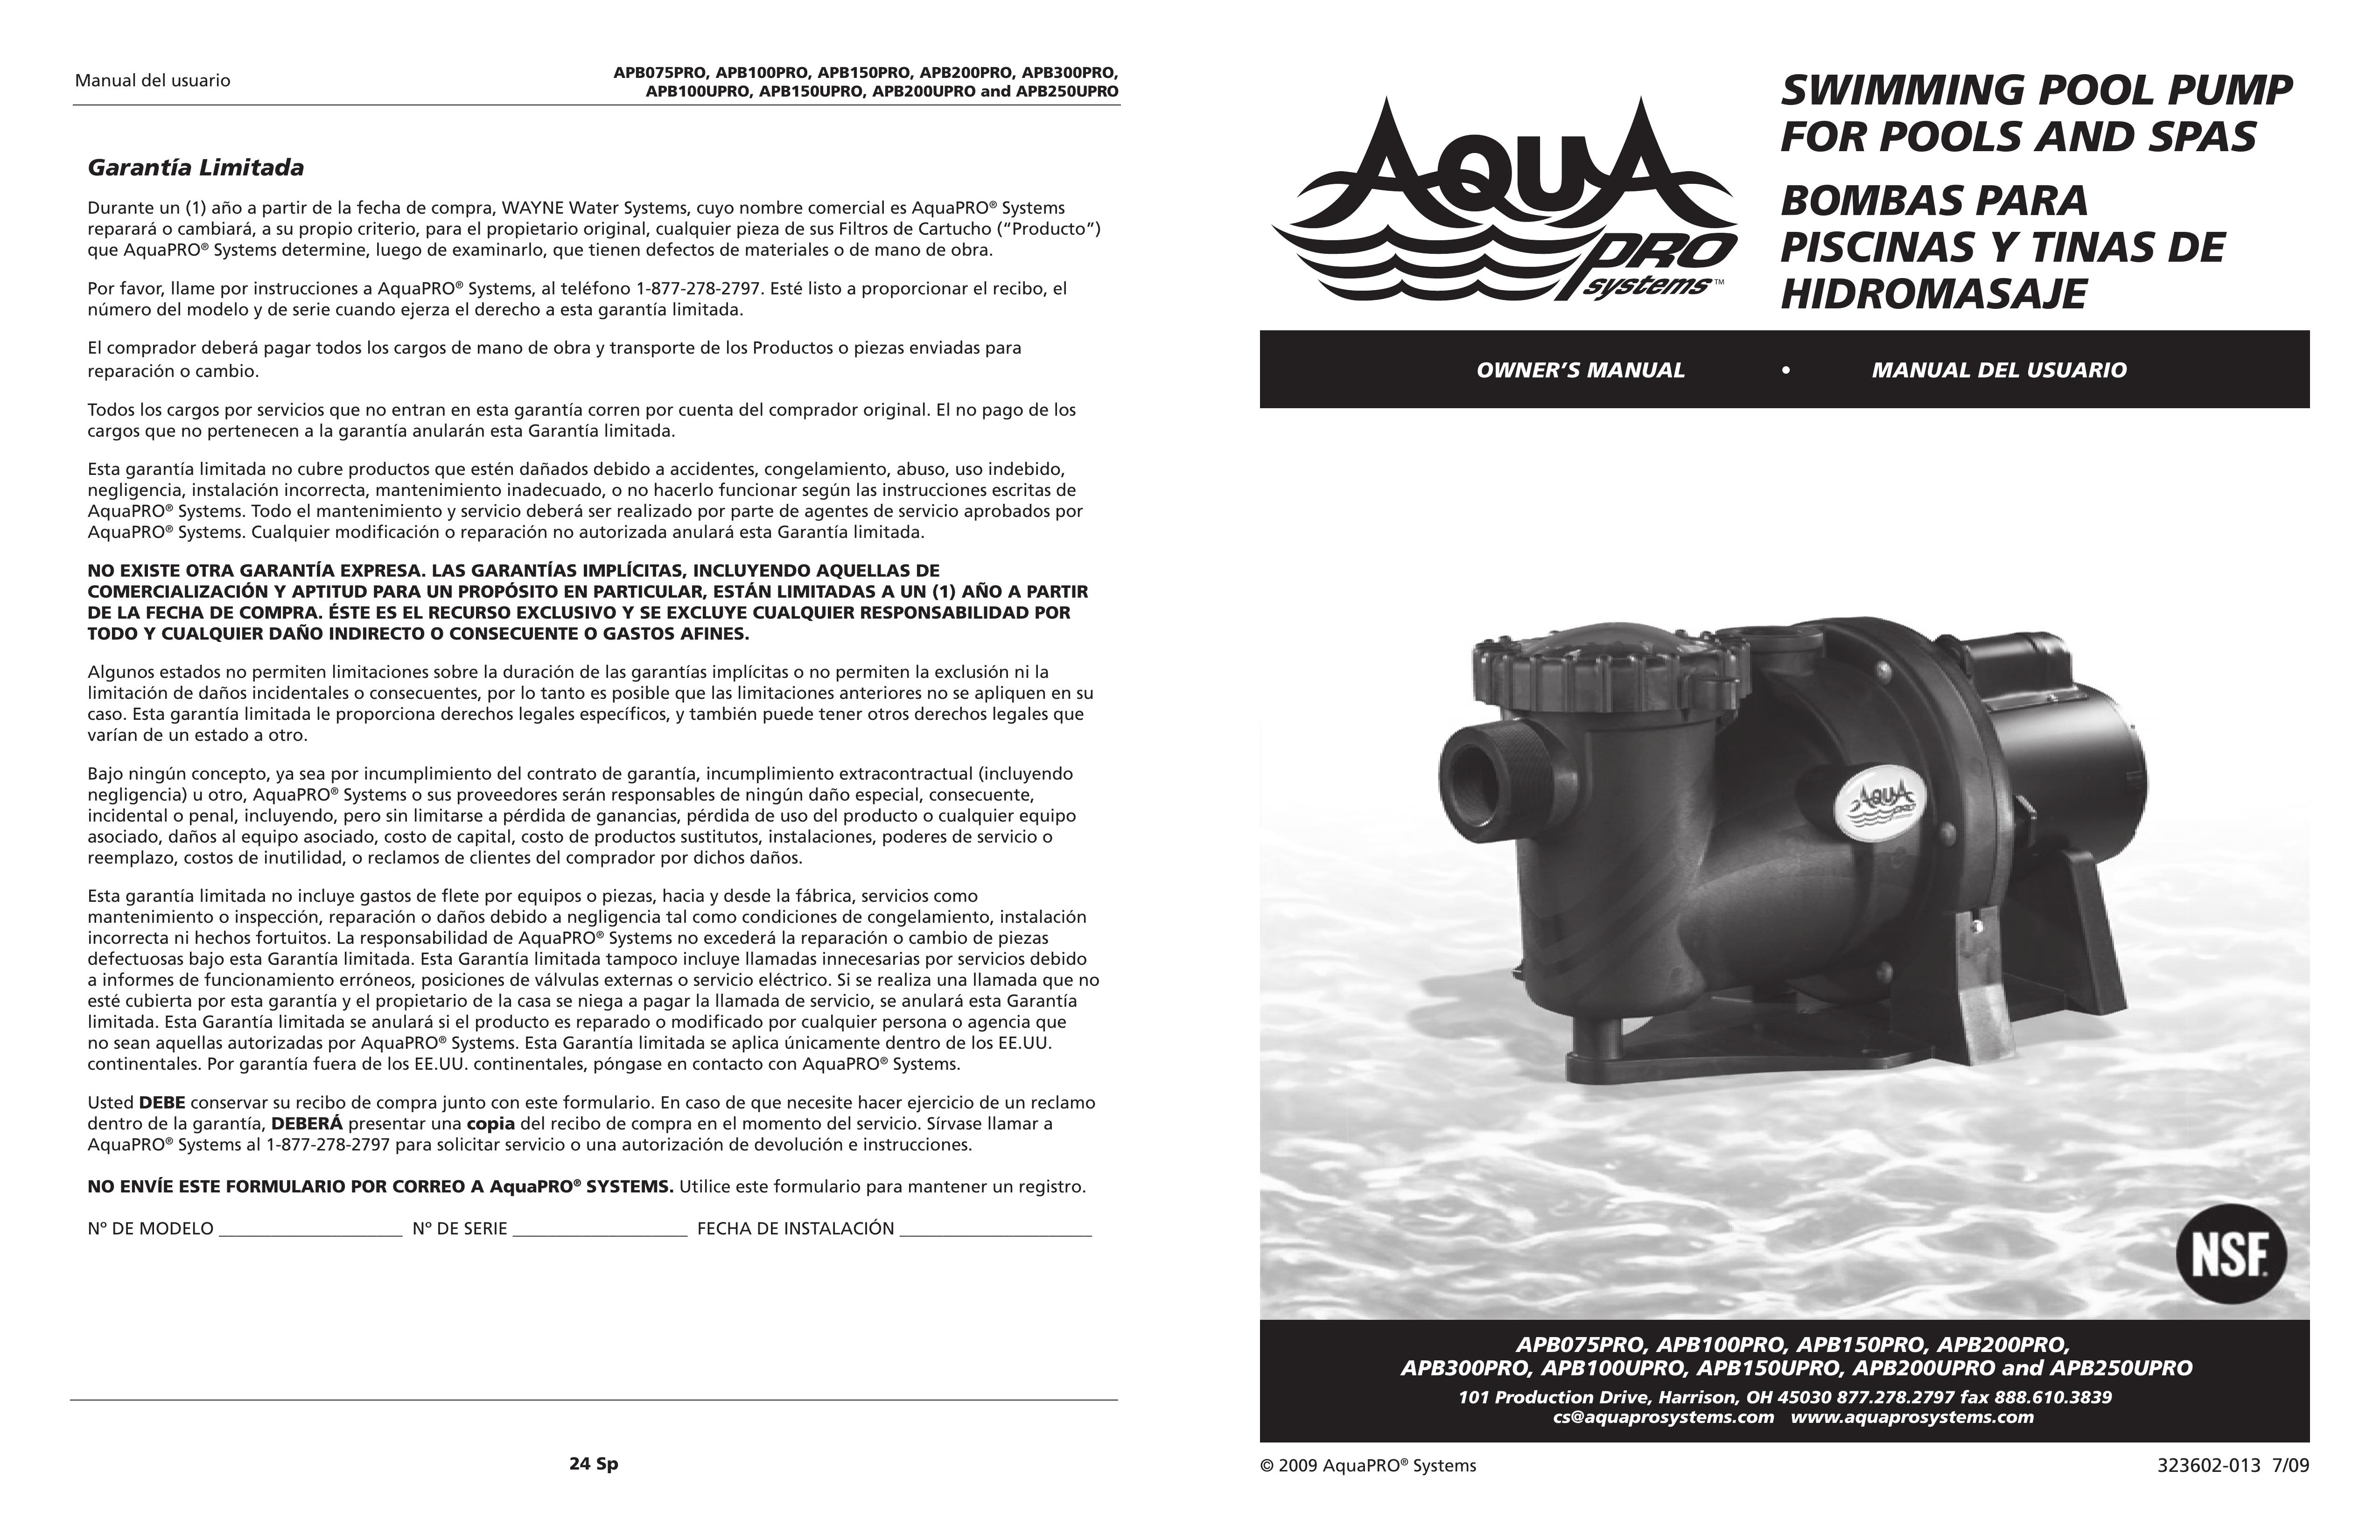 AquaPRO APB200PRO Swimming Pool Pump User Manual